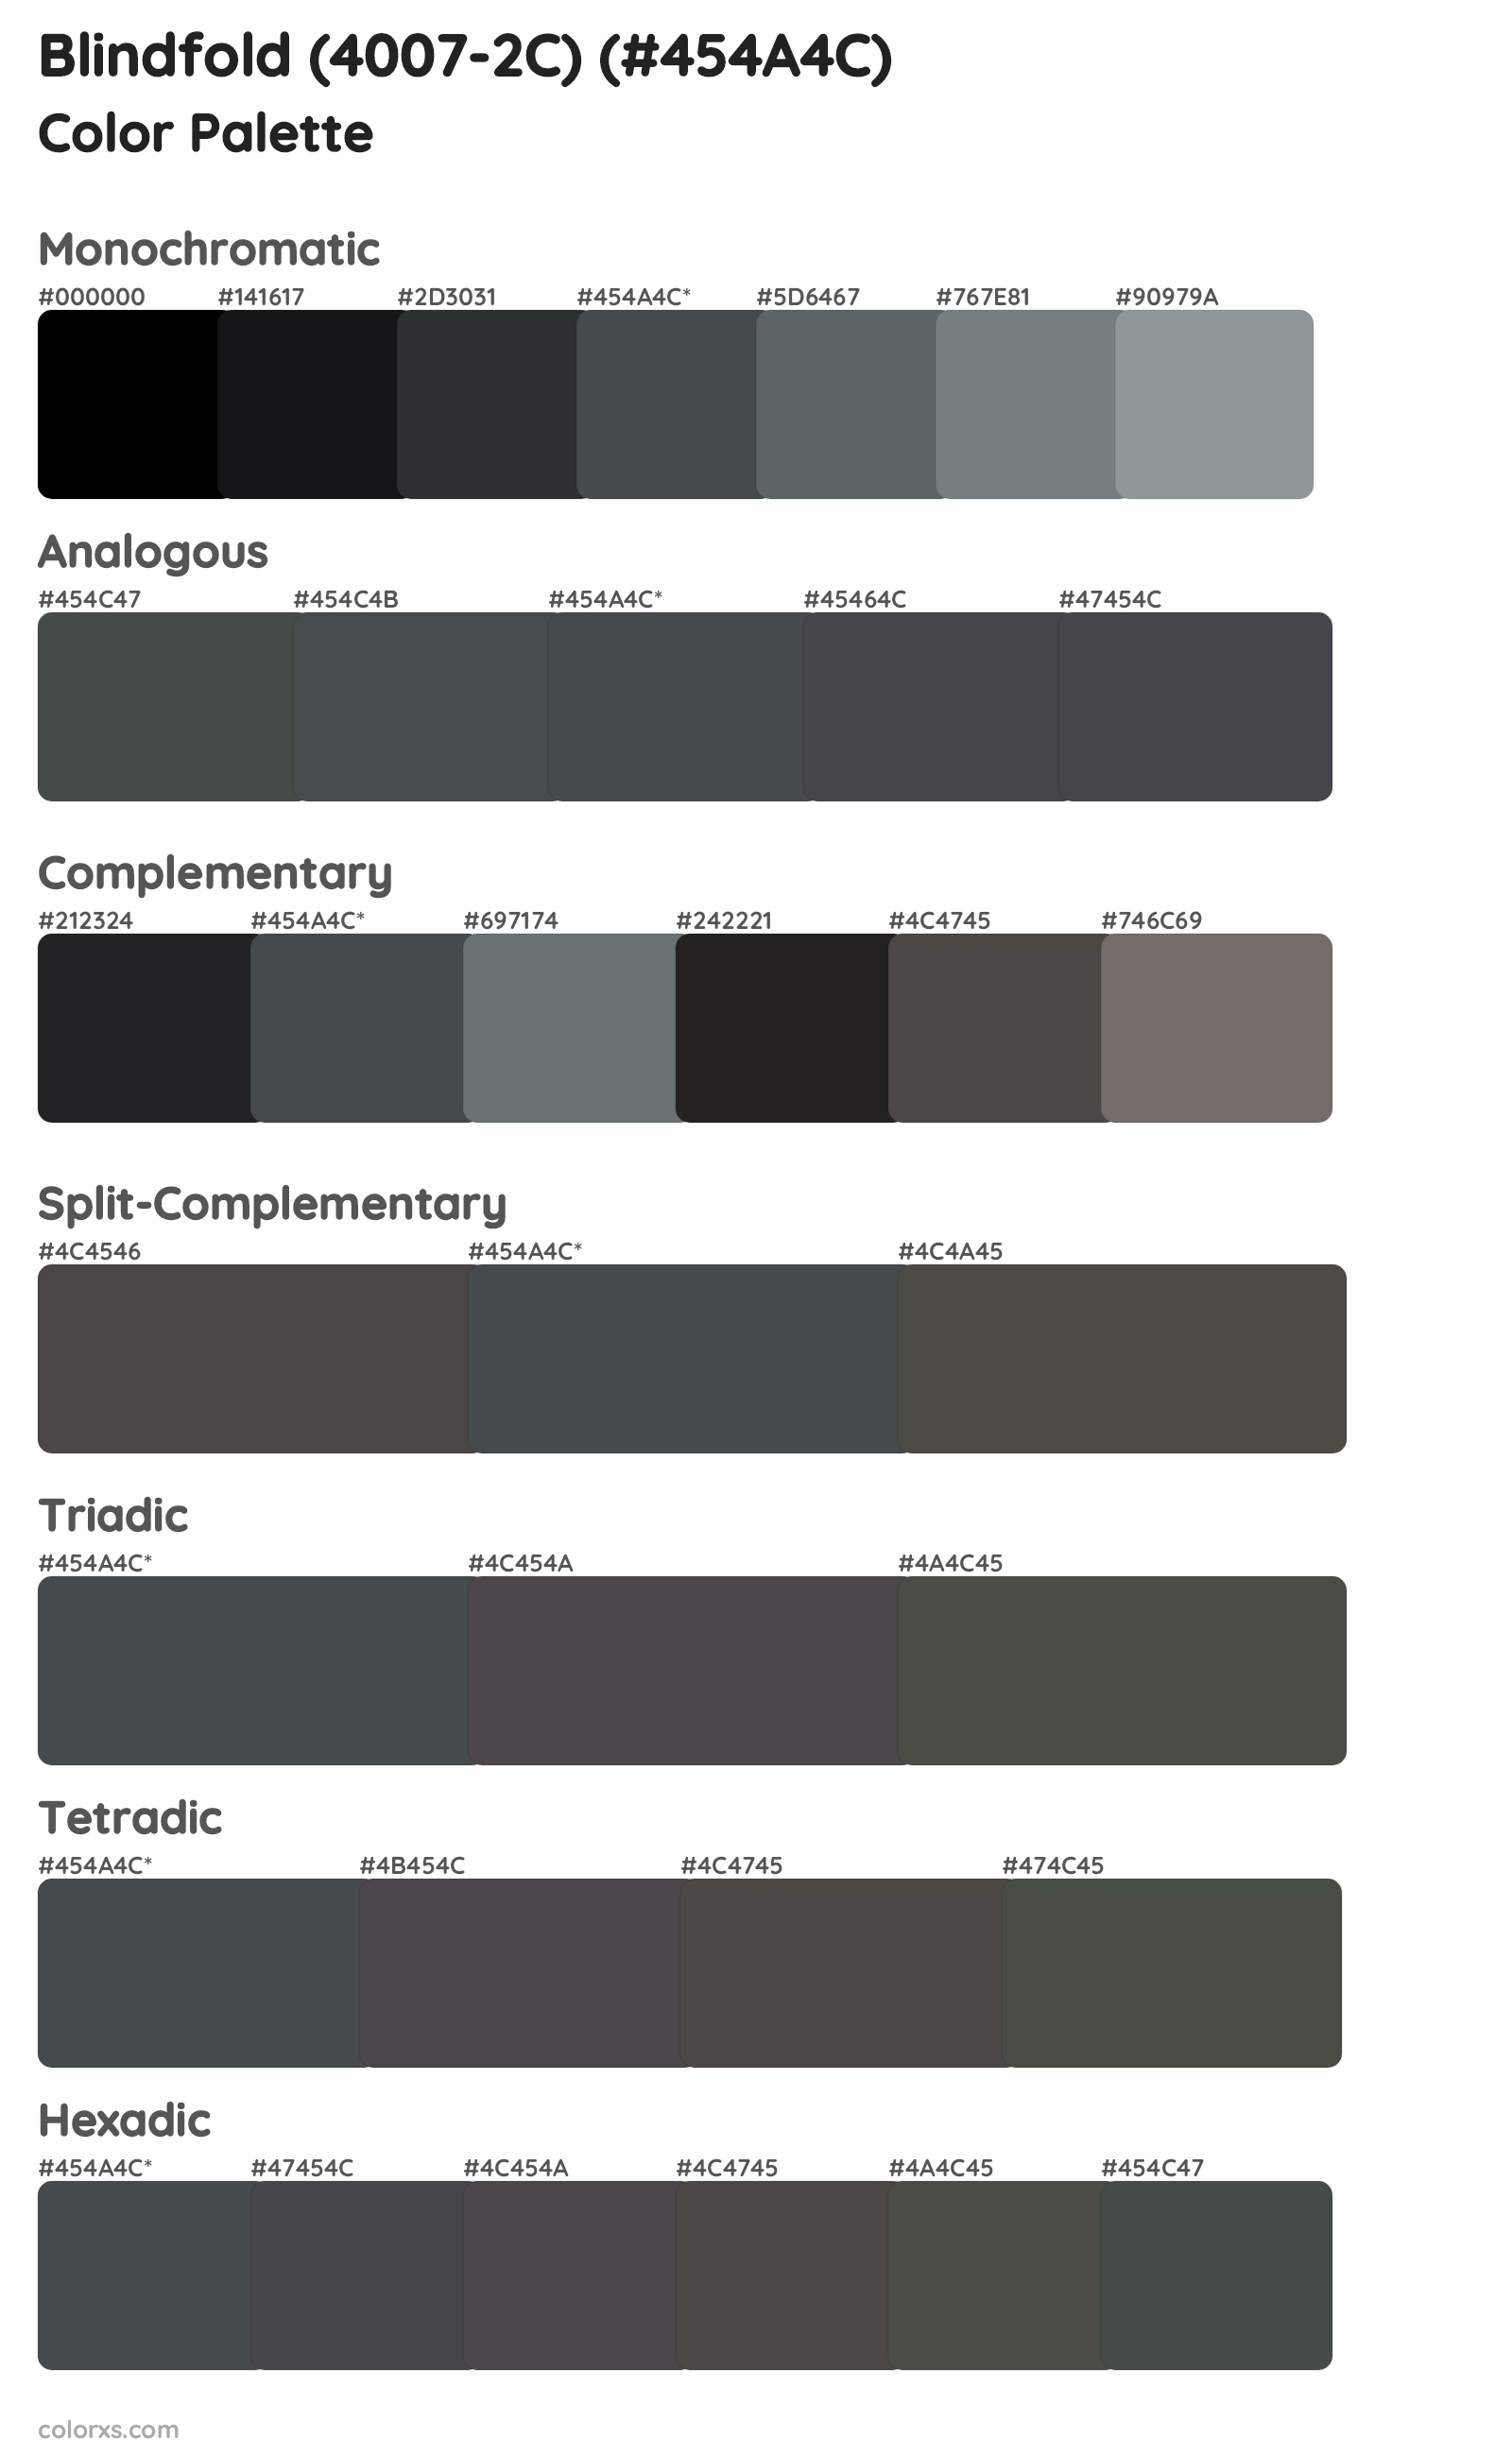 Blindfold (4007-2C) Color Scheme Palettes